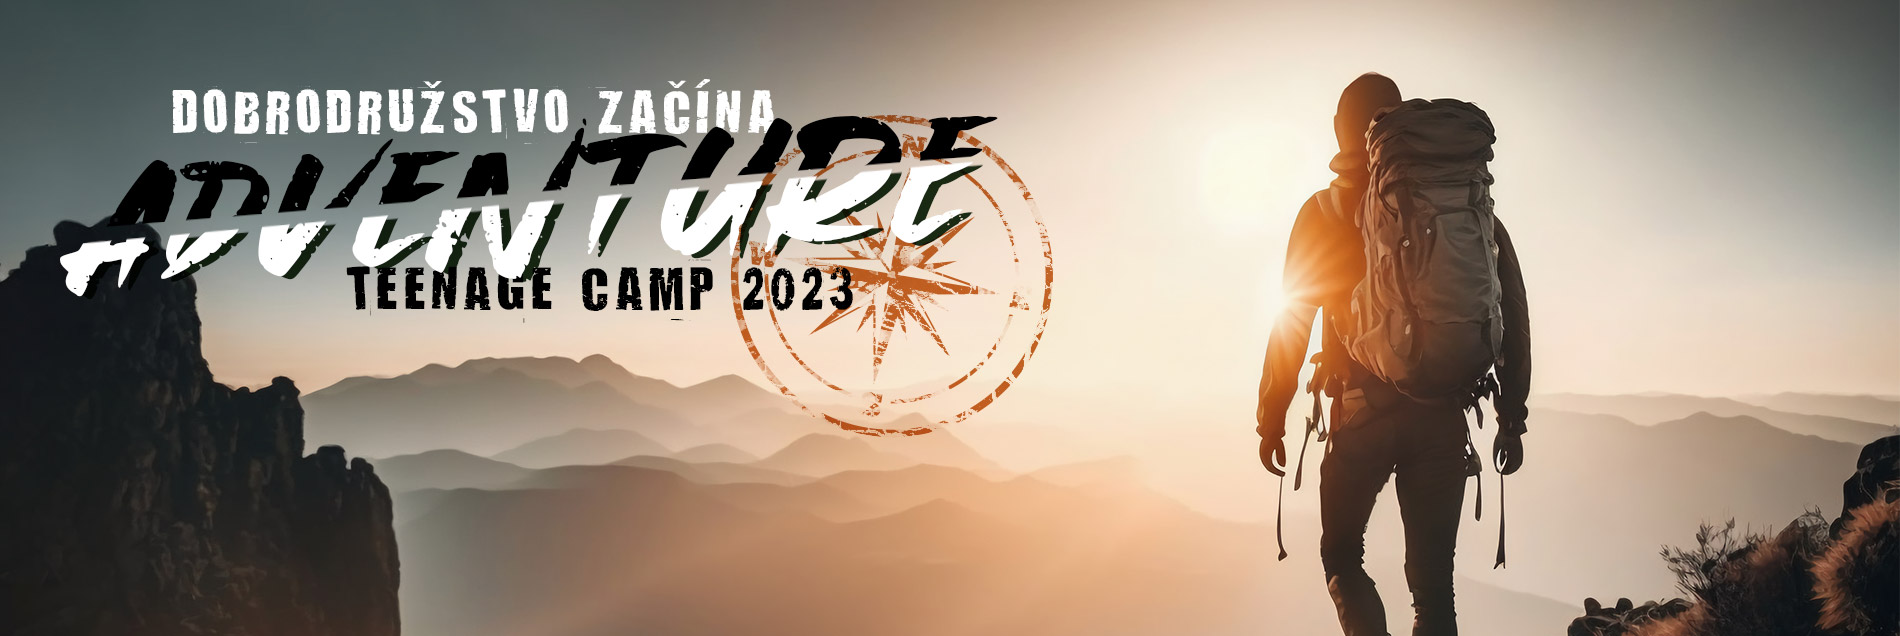 Teenage Camp 2023